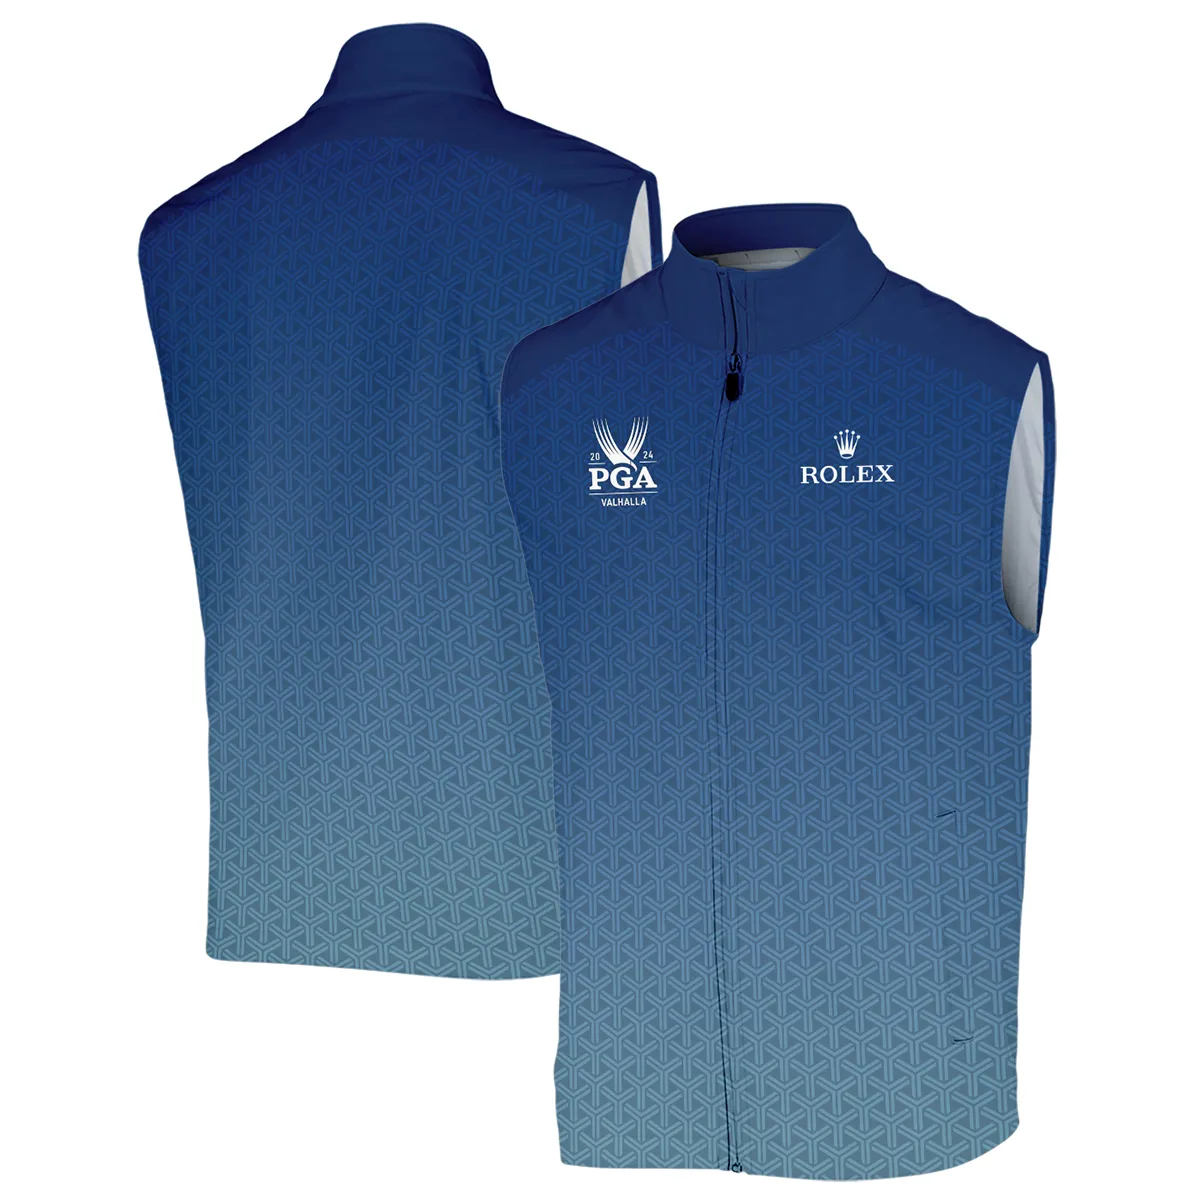 Golf Sport Pattern Blue Sport Uniform 2024 PGA Championship Valhalla Rolex Quarter-Zip Polo Shirt